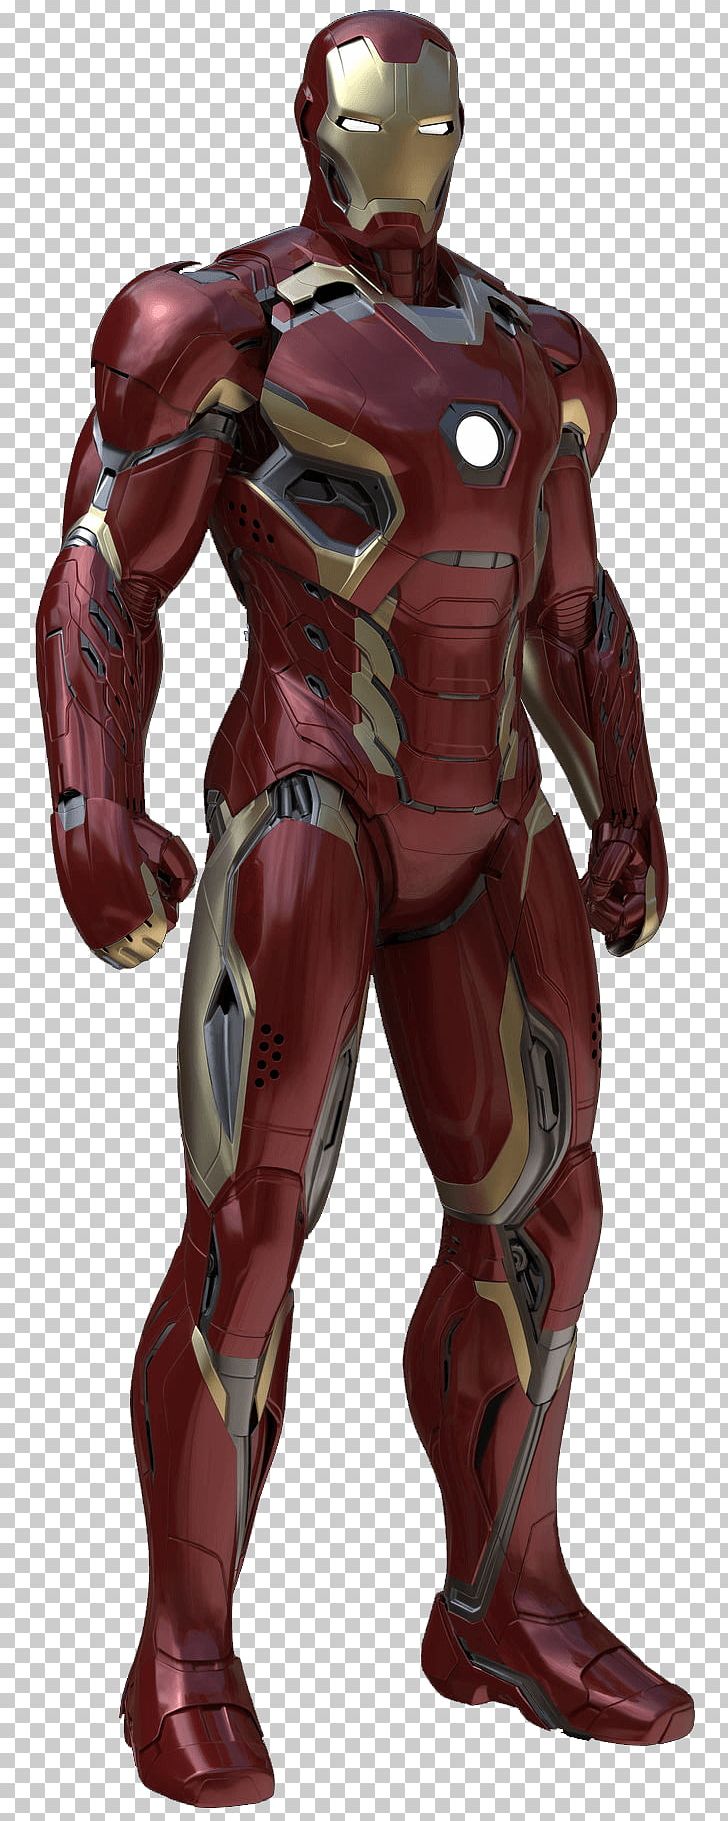 Iron Man's armor (Marvel Cinematic Universe) - Wikipedia